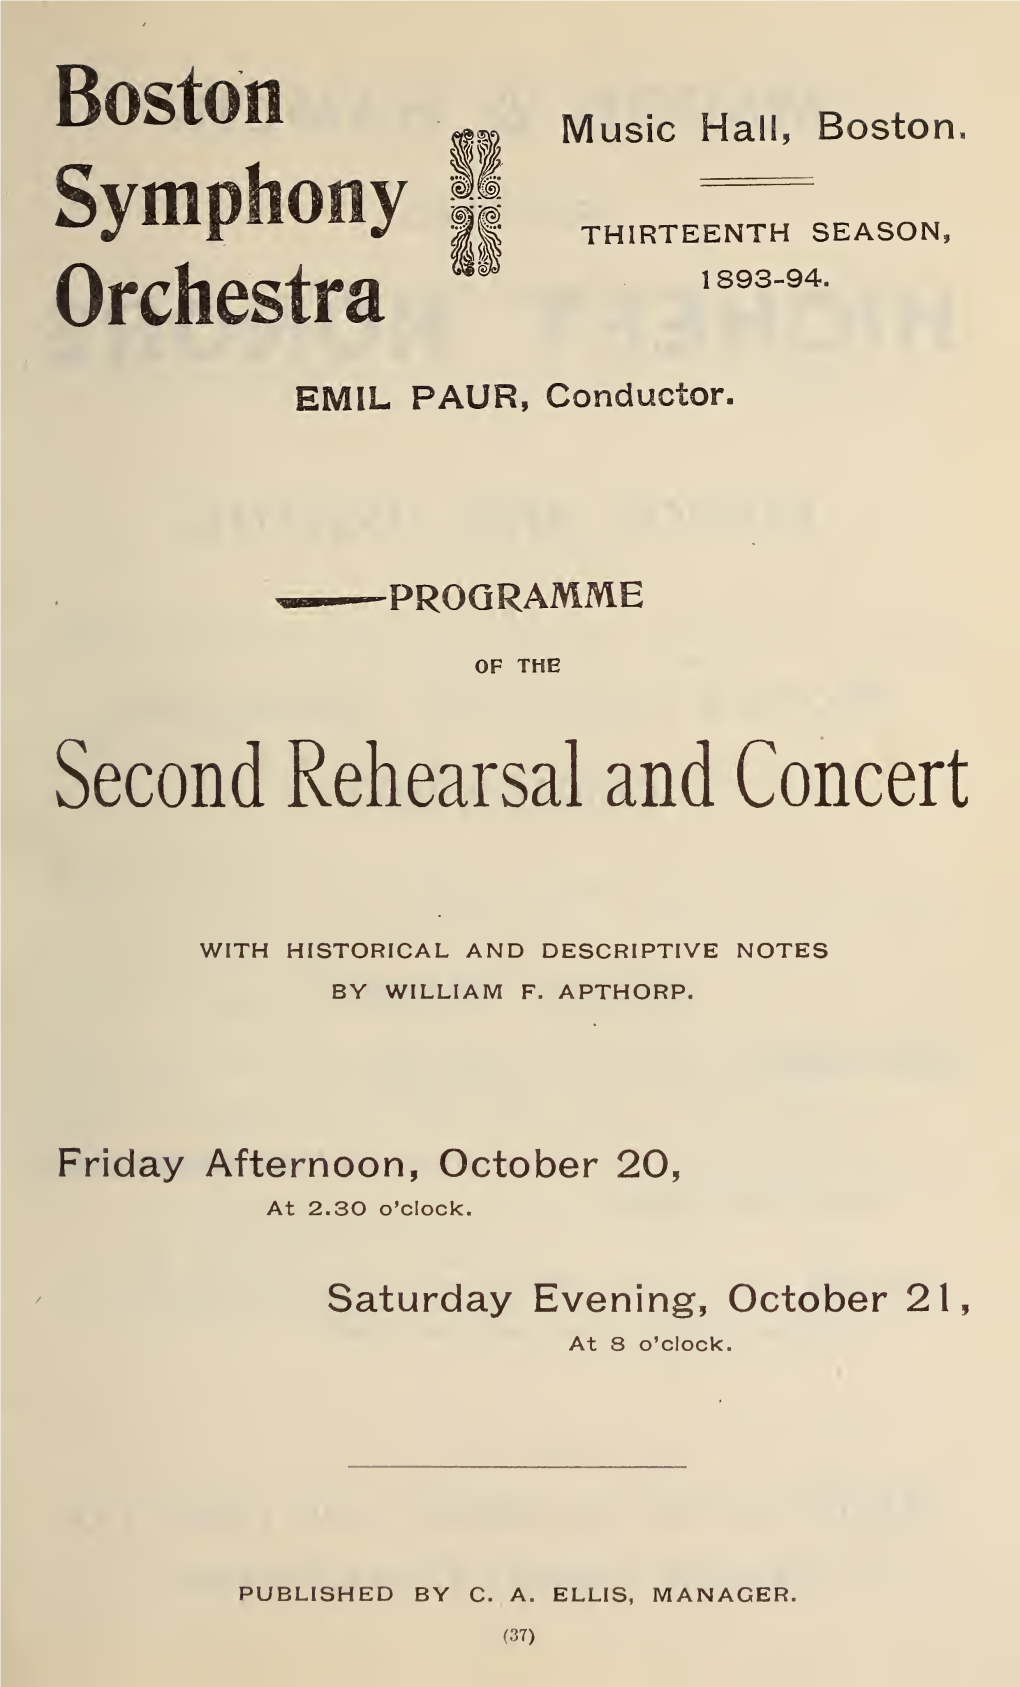 Boston Symphony Orchestra Concert Programs, Season 13, 1893-1894